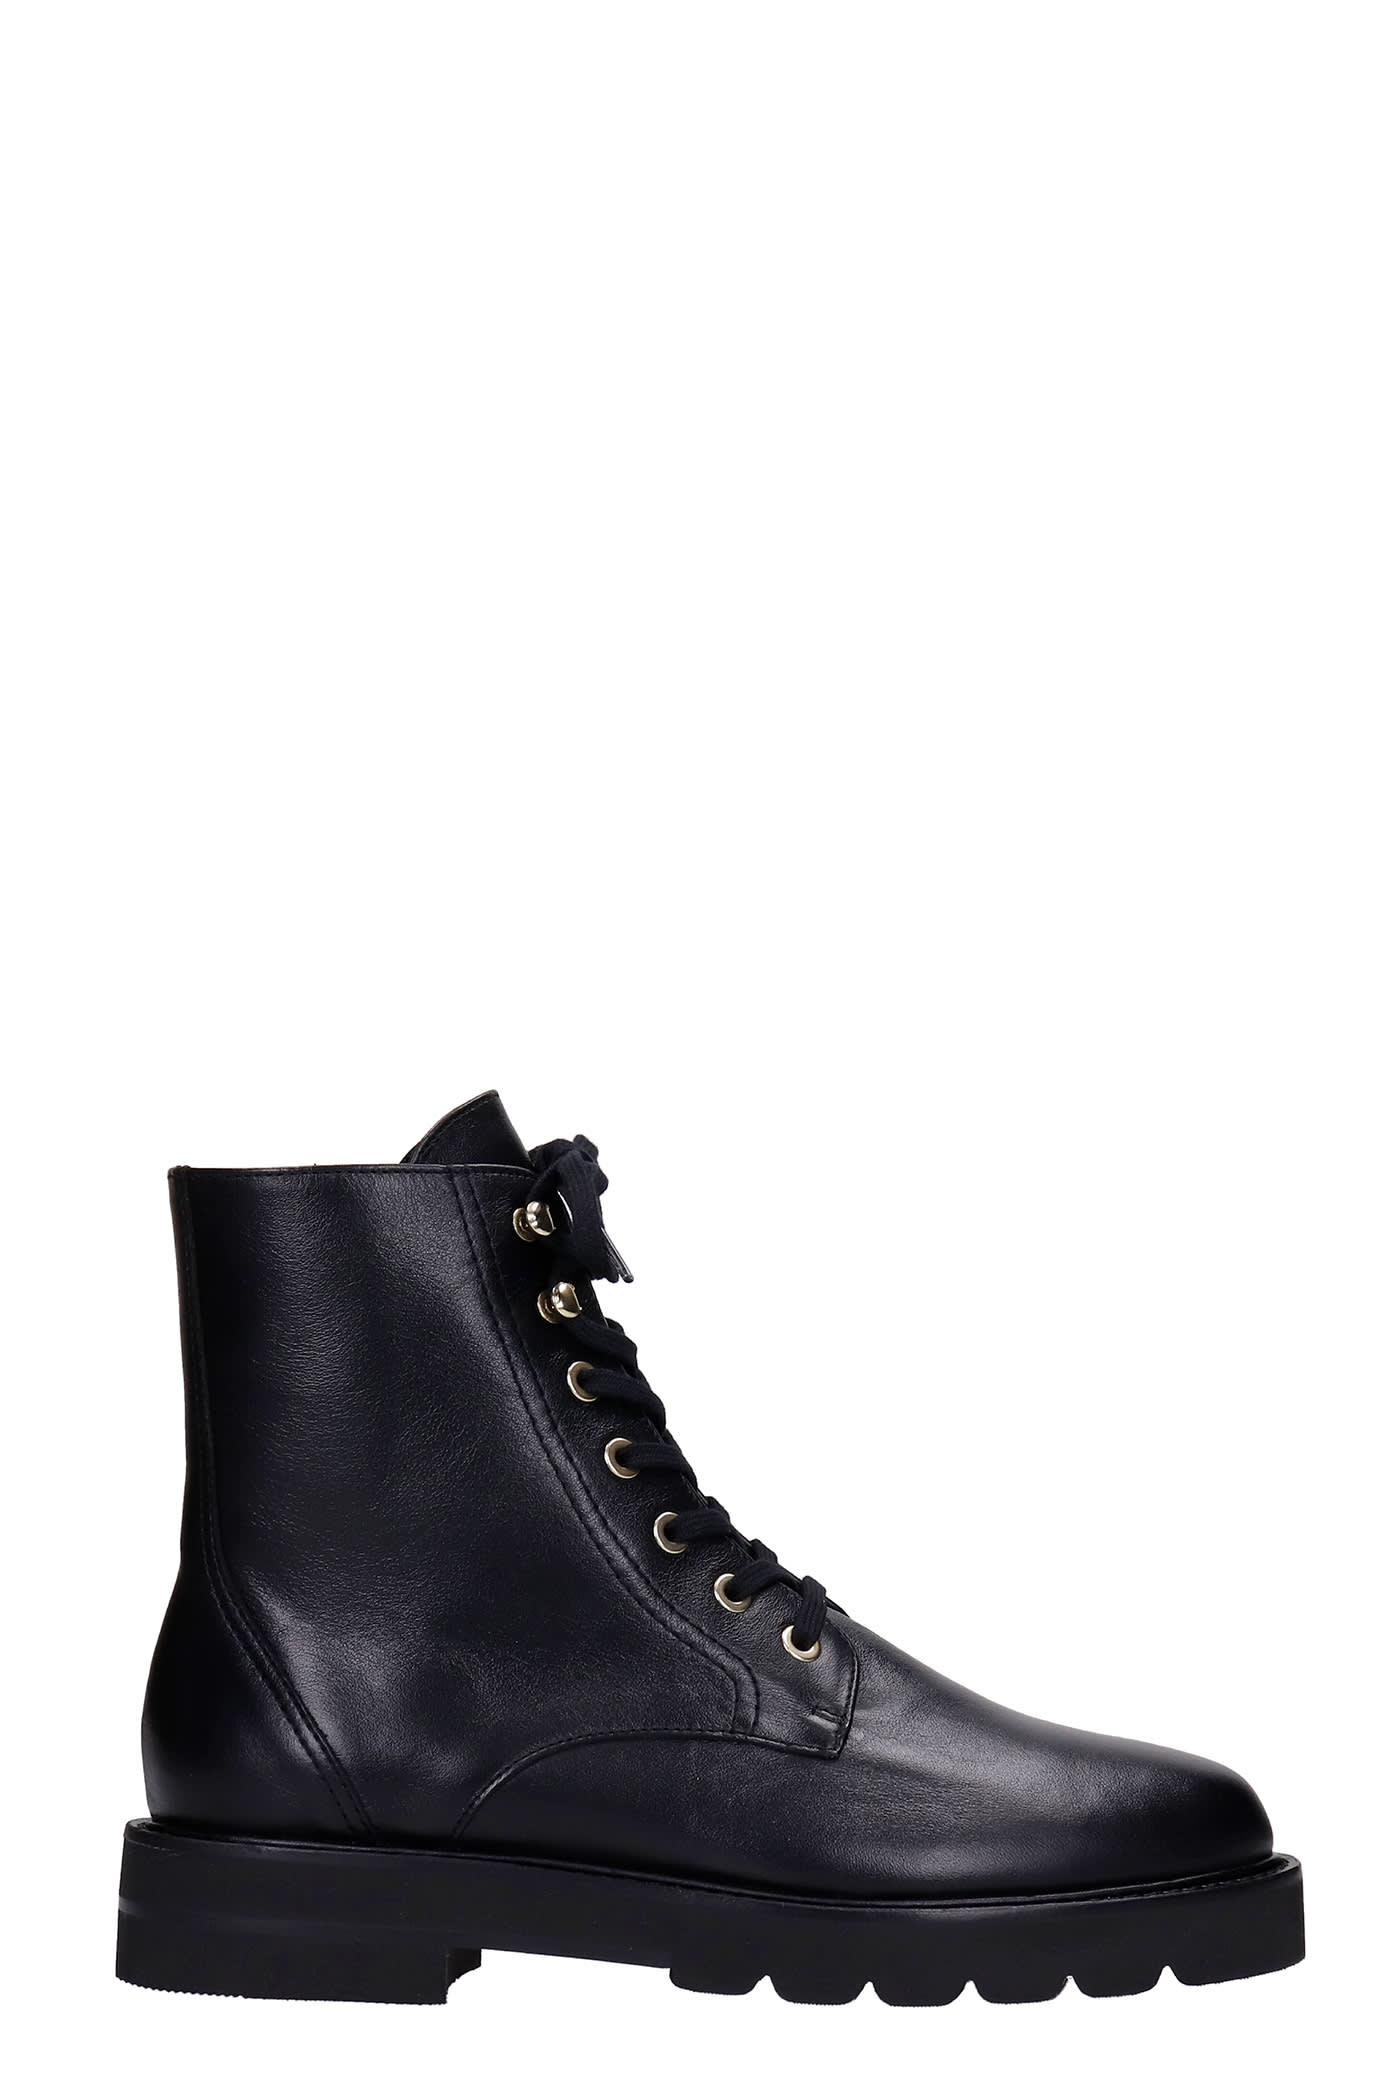 Stuart Weitzman Mila Lif Combat Boots In Black Leather